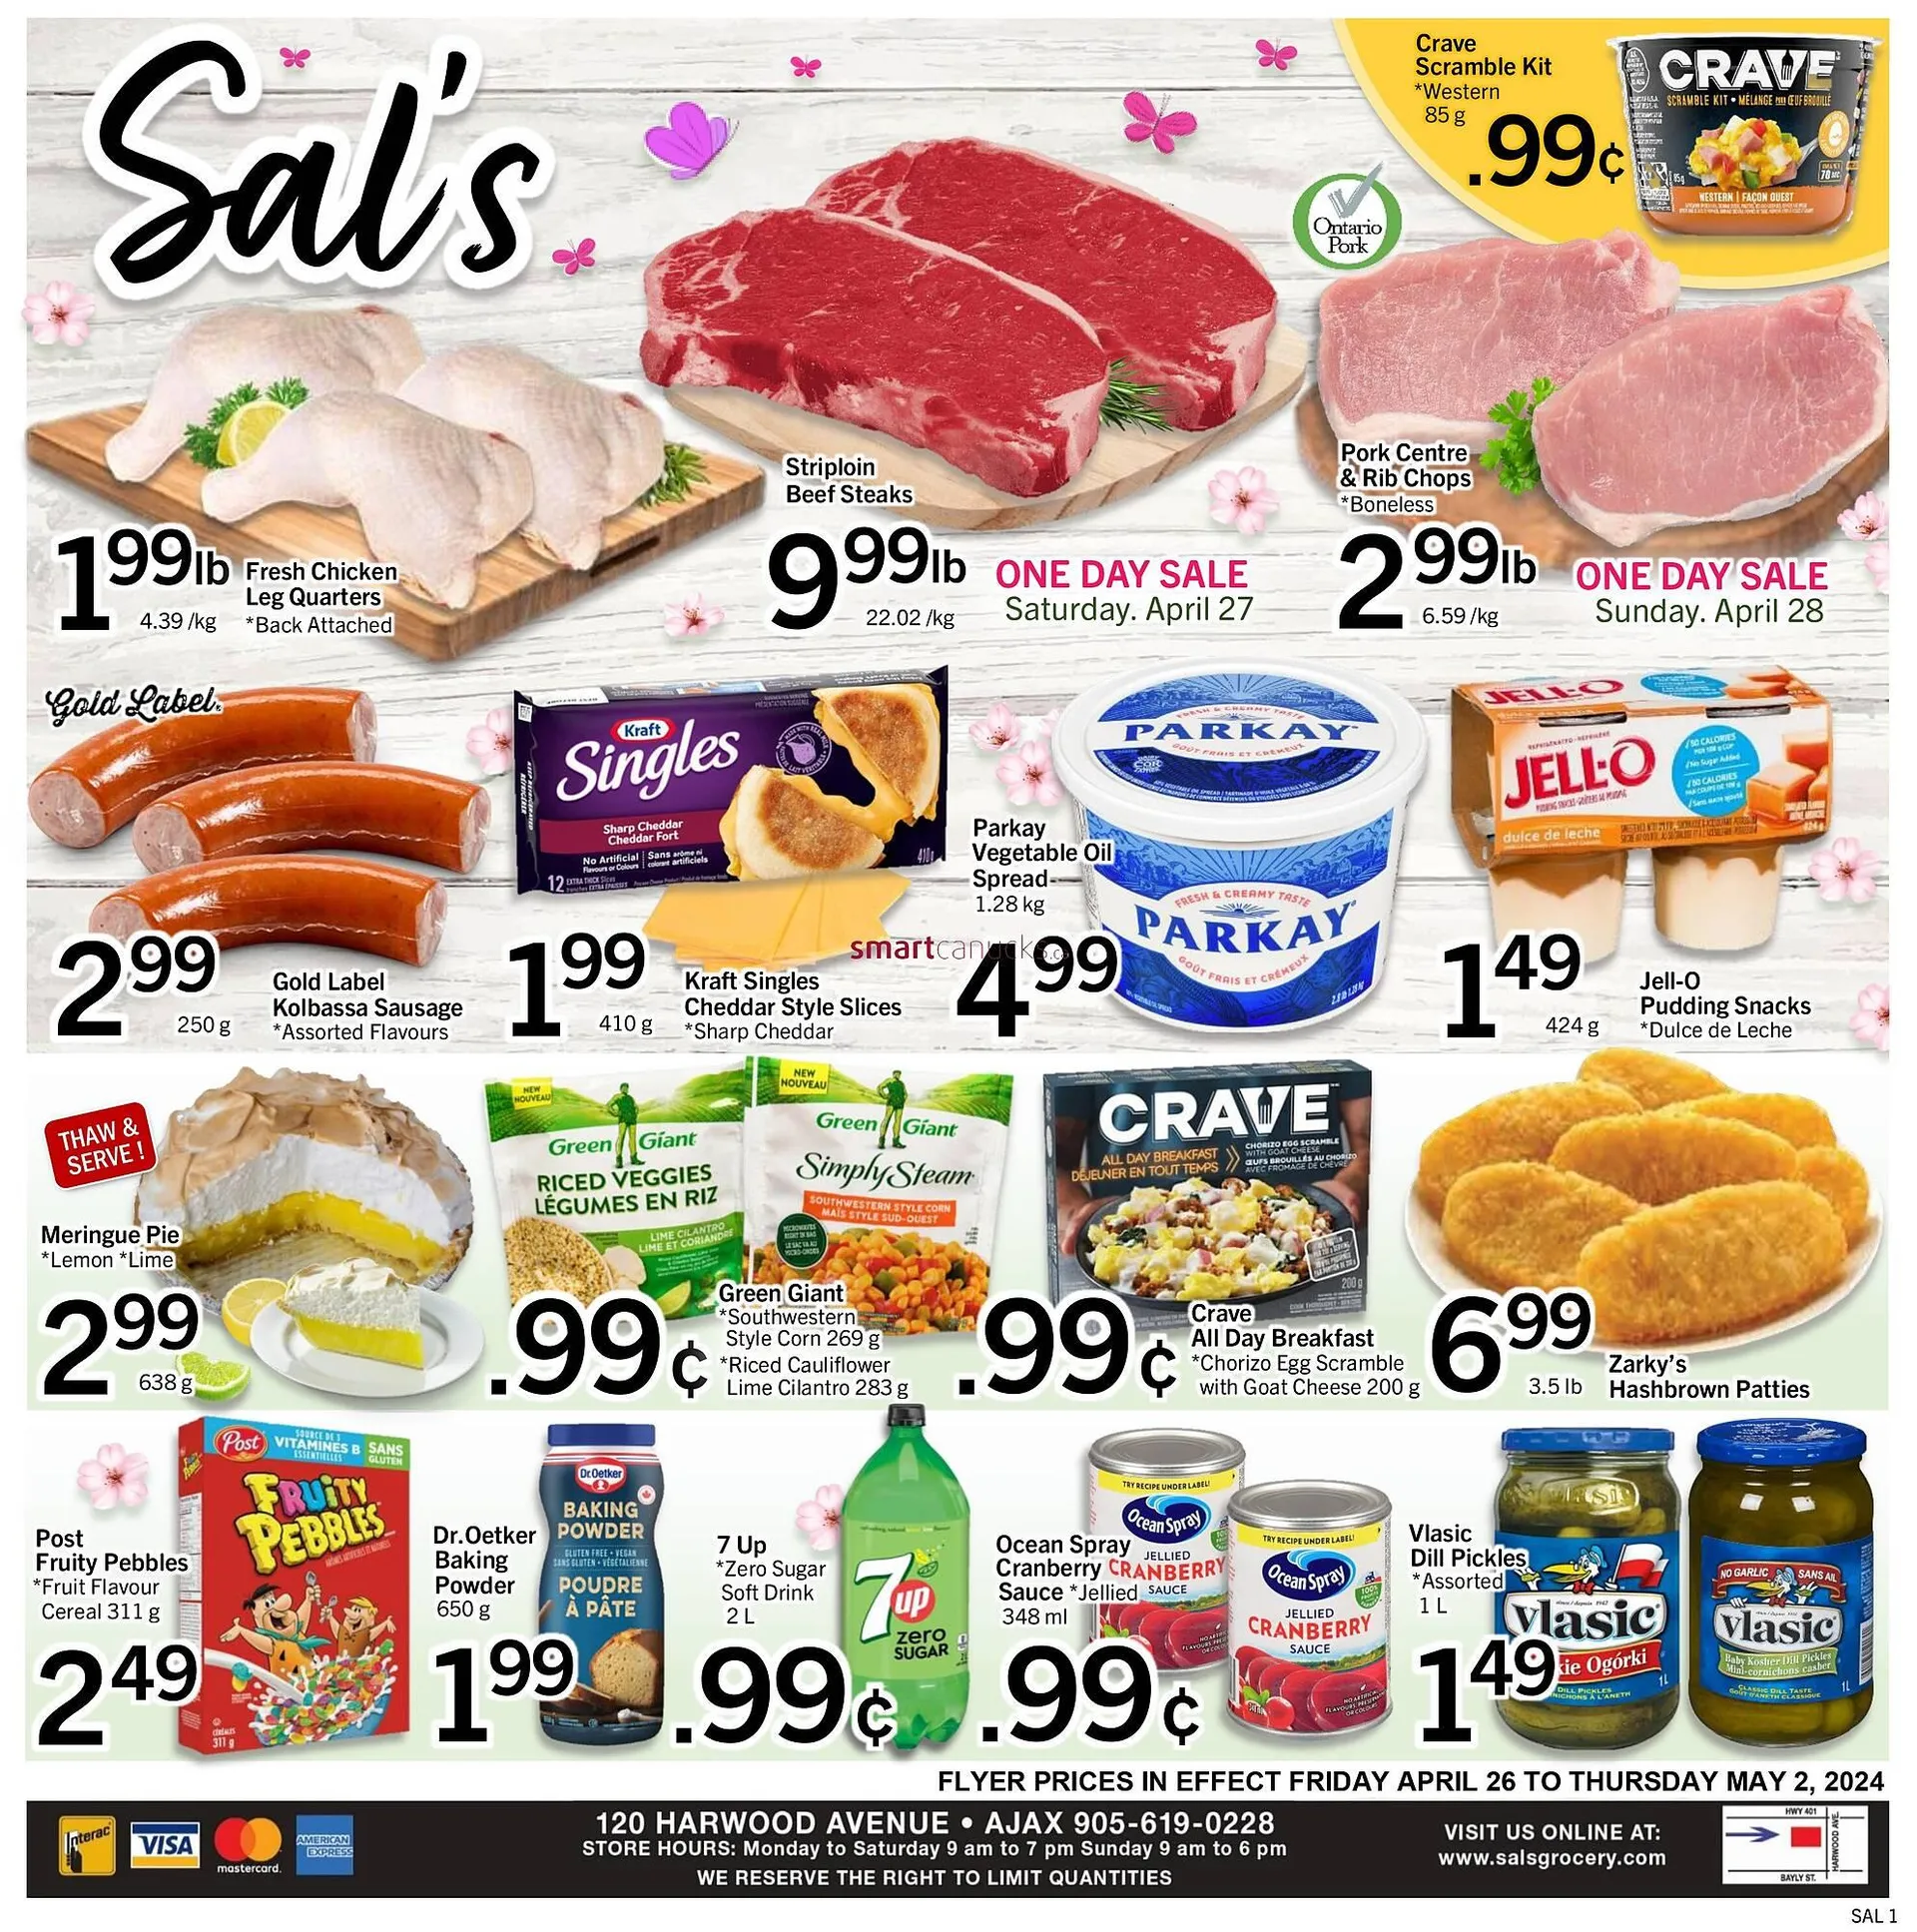 Sals Grocery flyer - 1